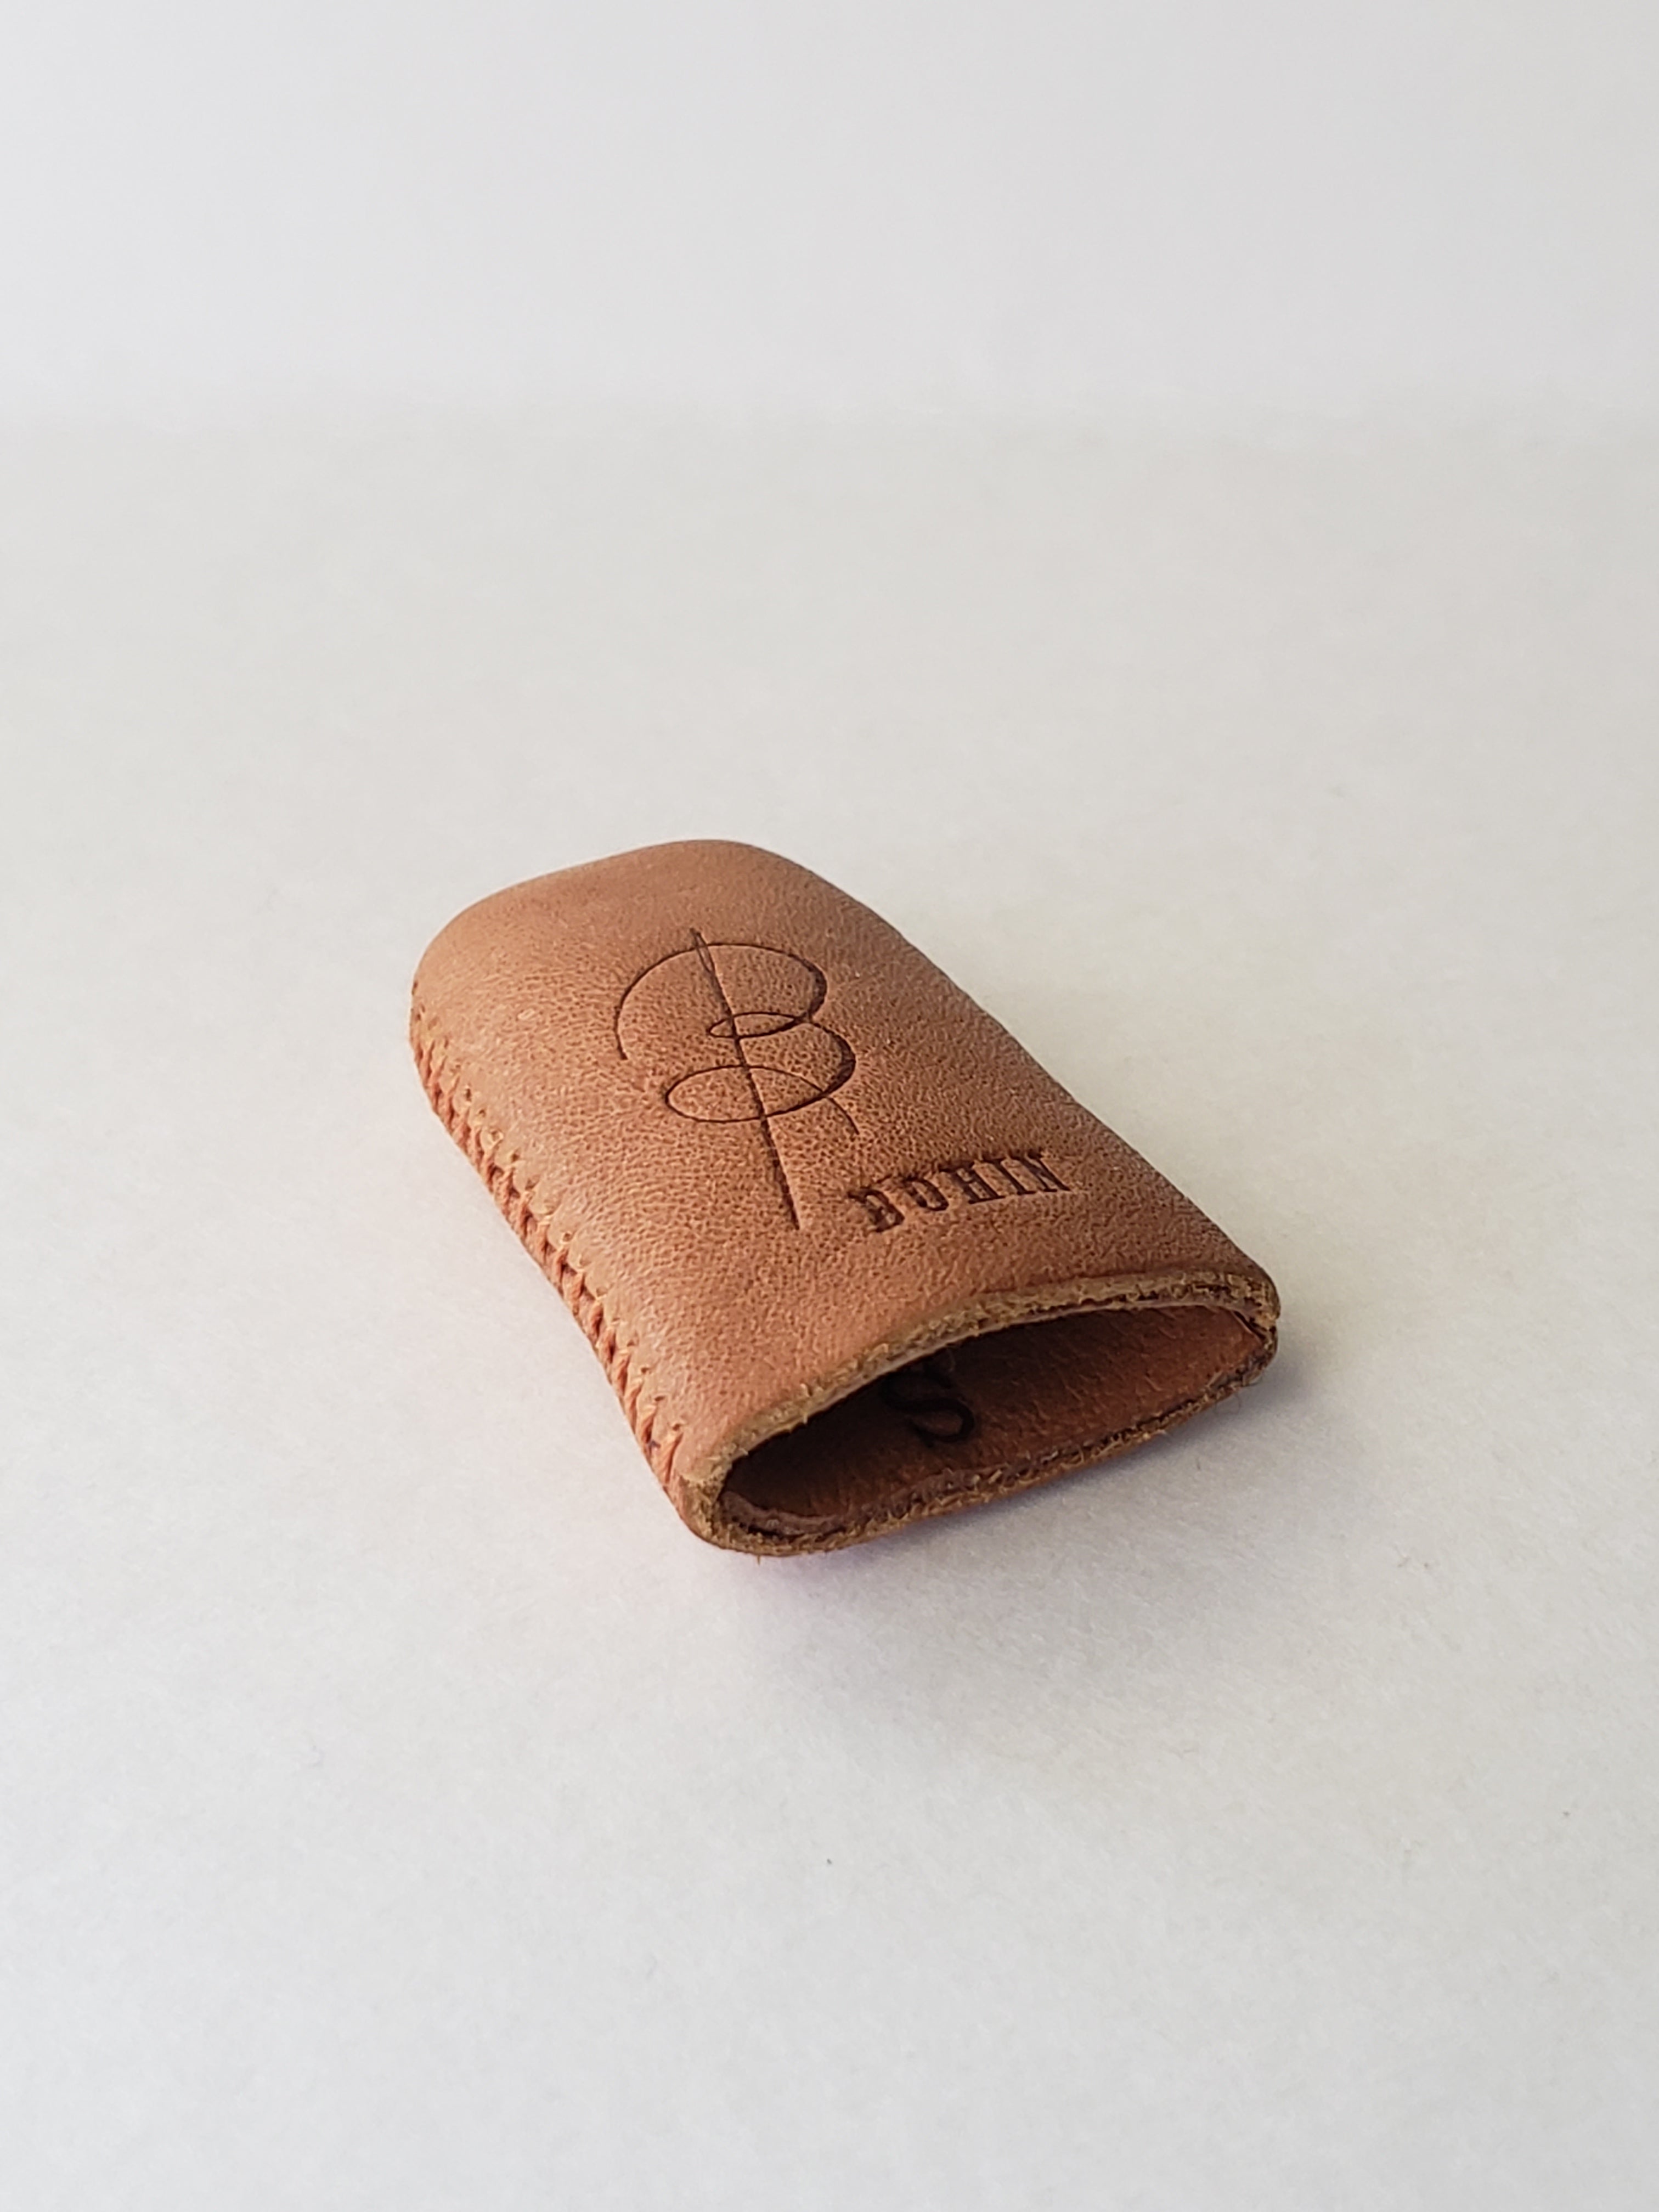 Leather Thimble – Fibr & Cloth Studio